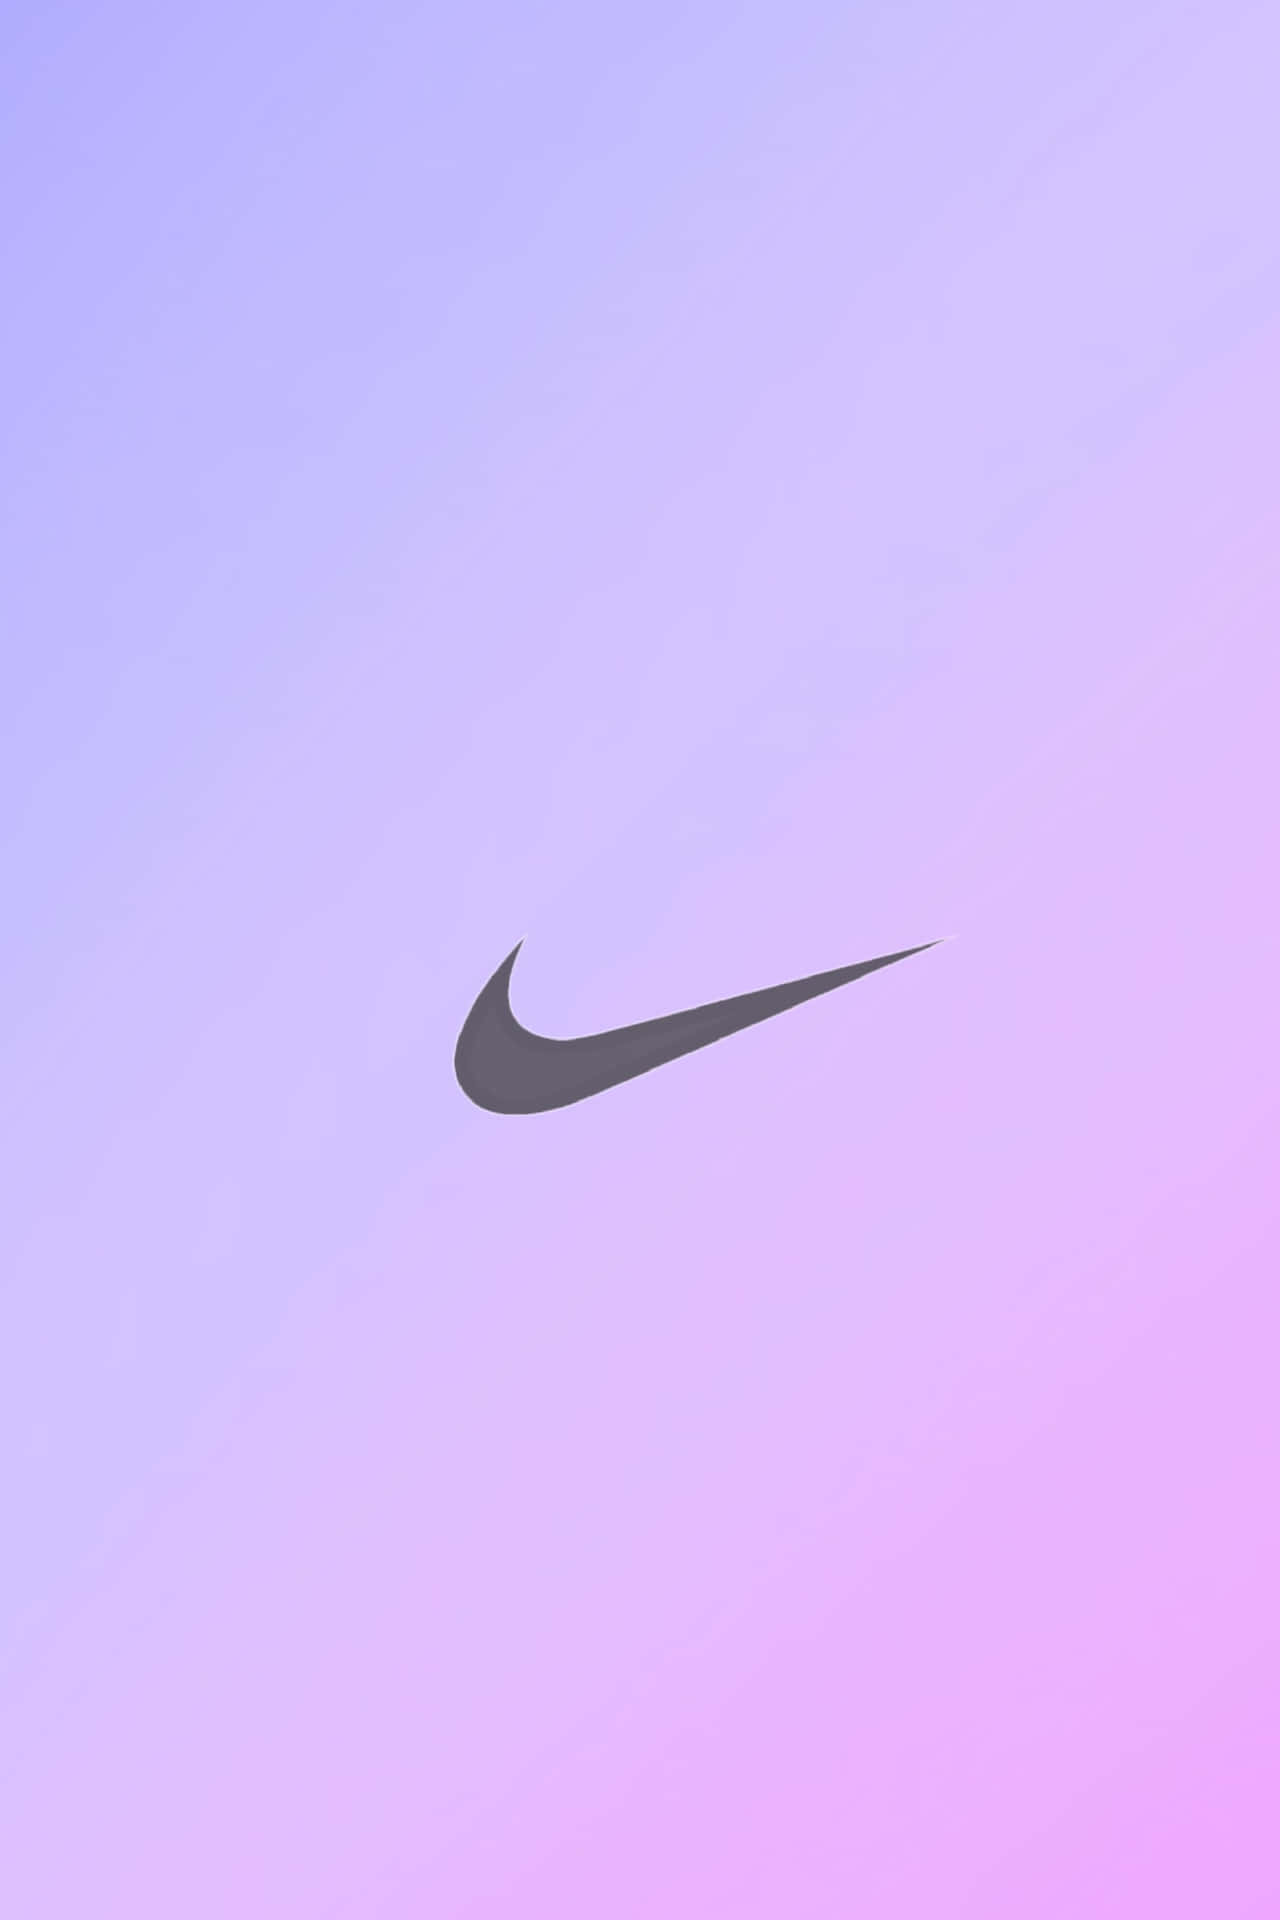 Nike Swoosh Purple Gradient Aesthetic.jpg Wallpaper